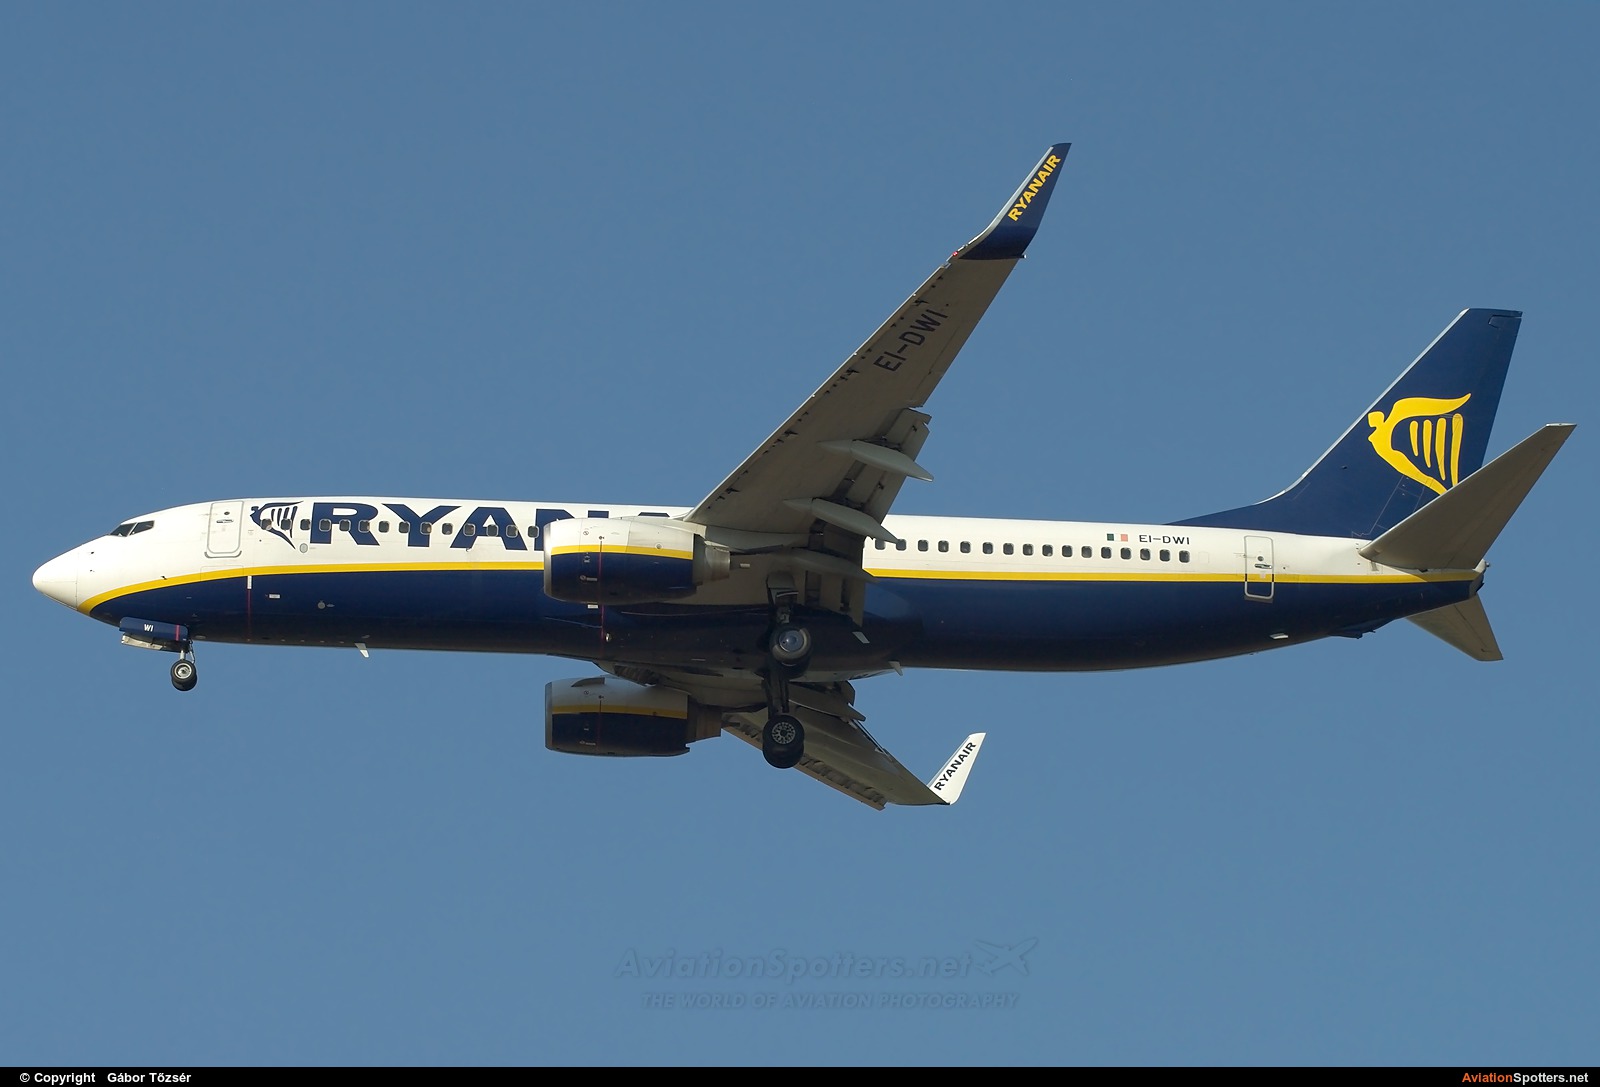 Ryanair  -  737-800  (EI-DWI) By Gábor Tőzsér (tizsi85)